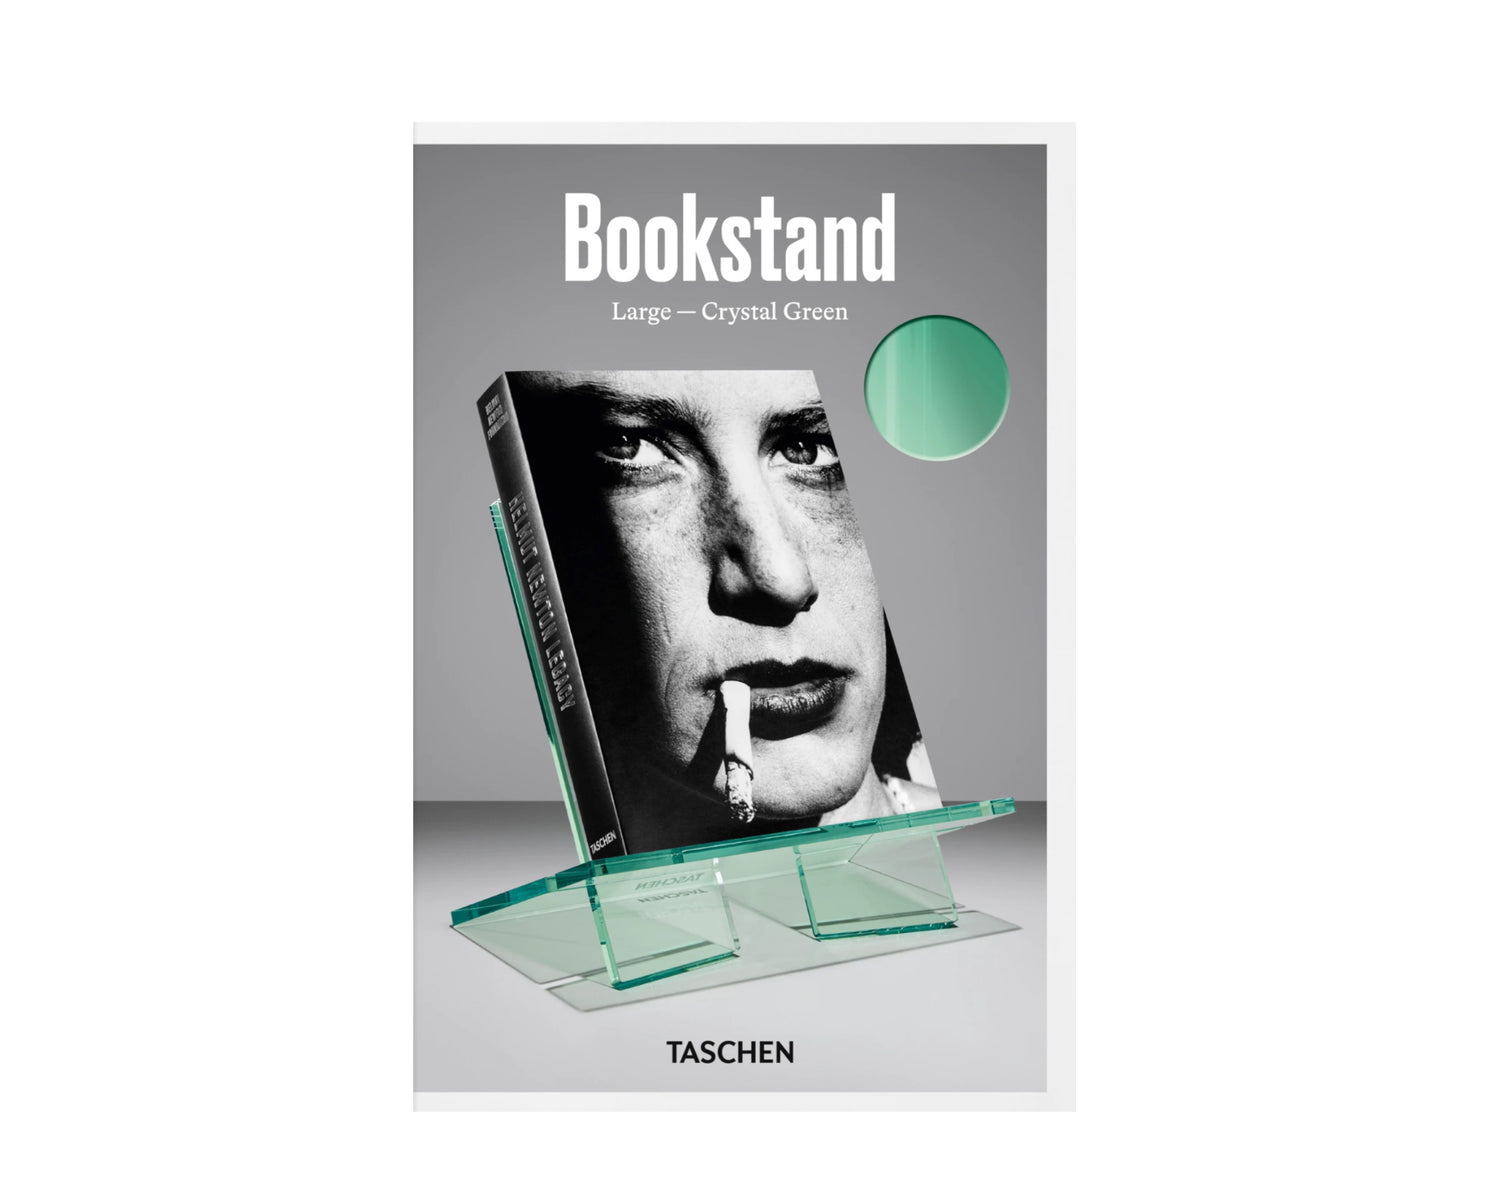 Taschen Books - Bookstand. Large. Crystal Green - Display Holder